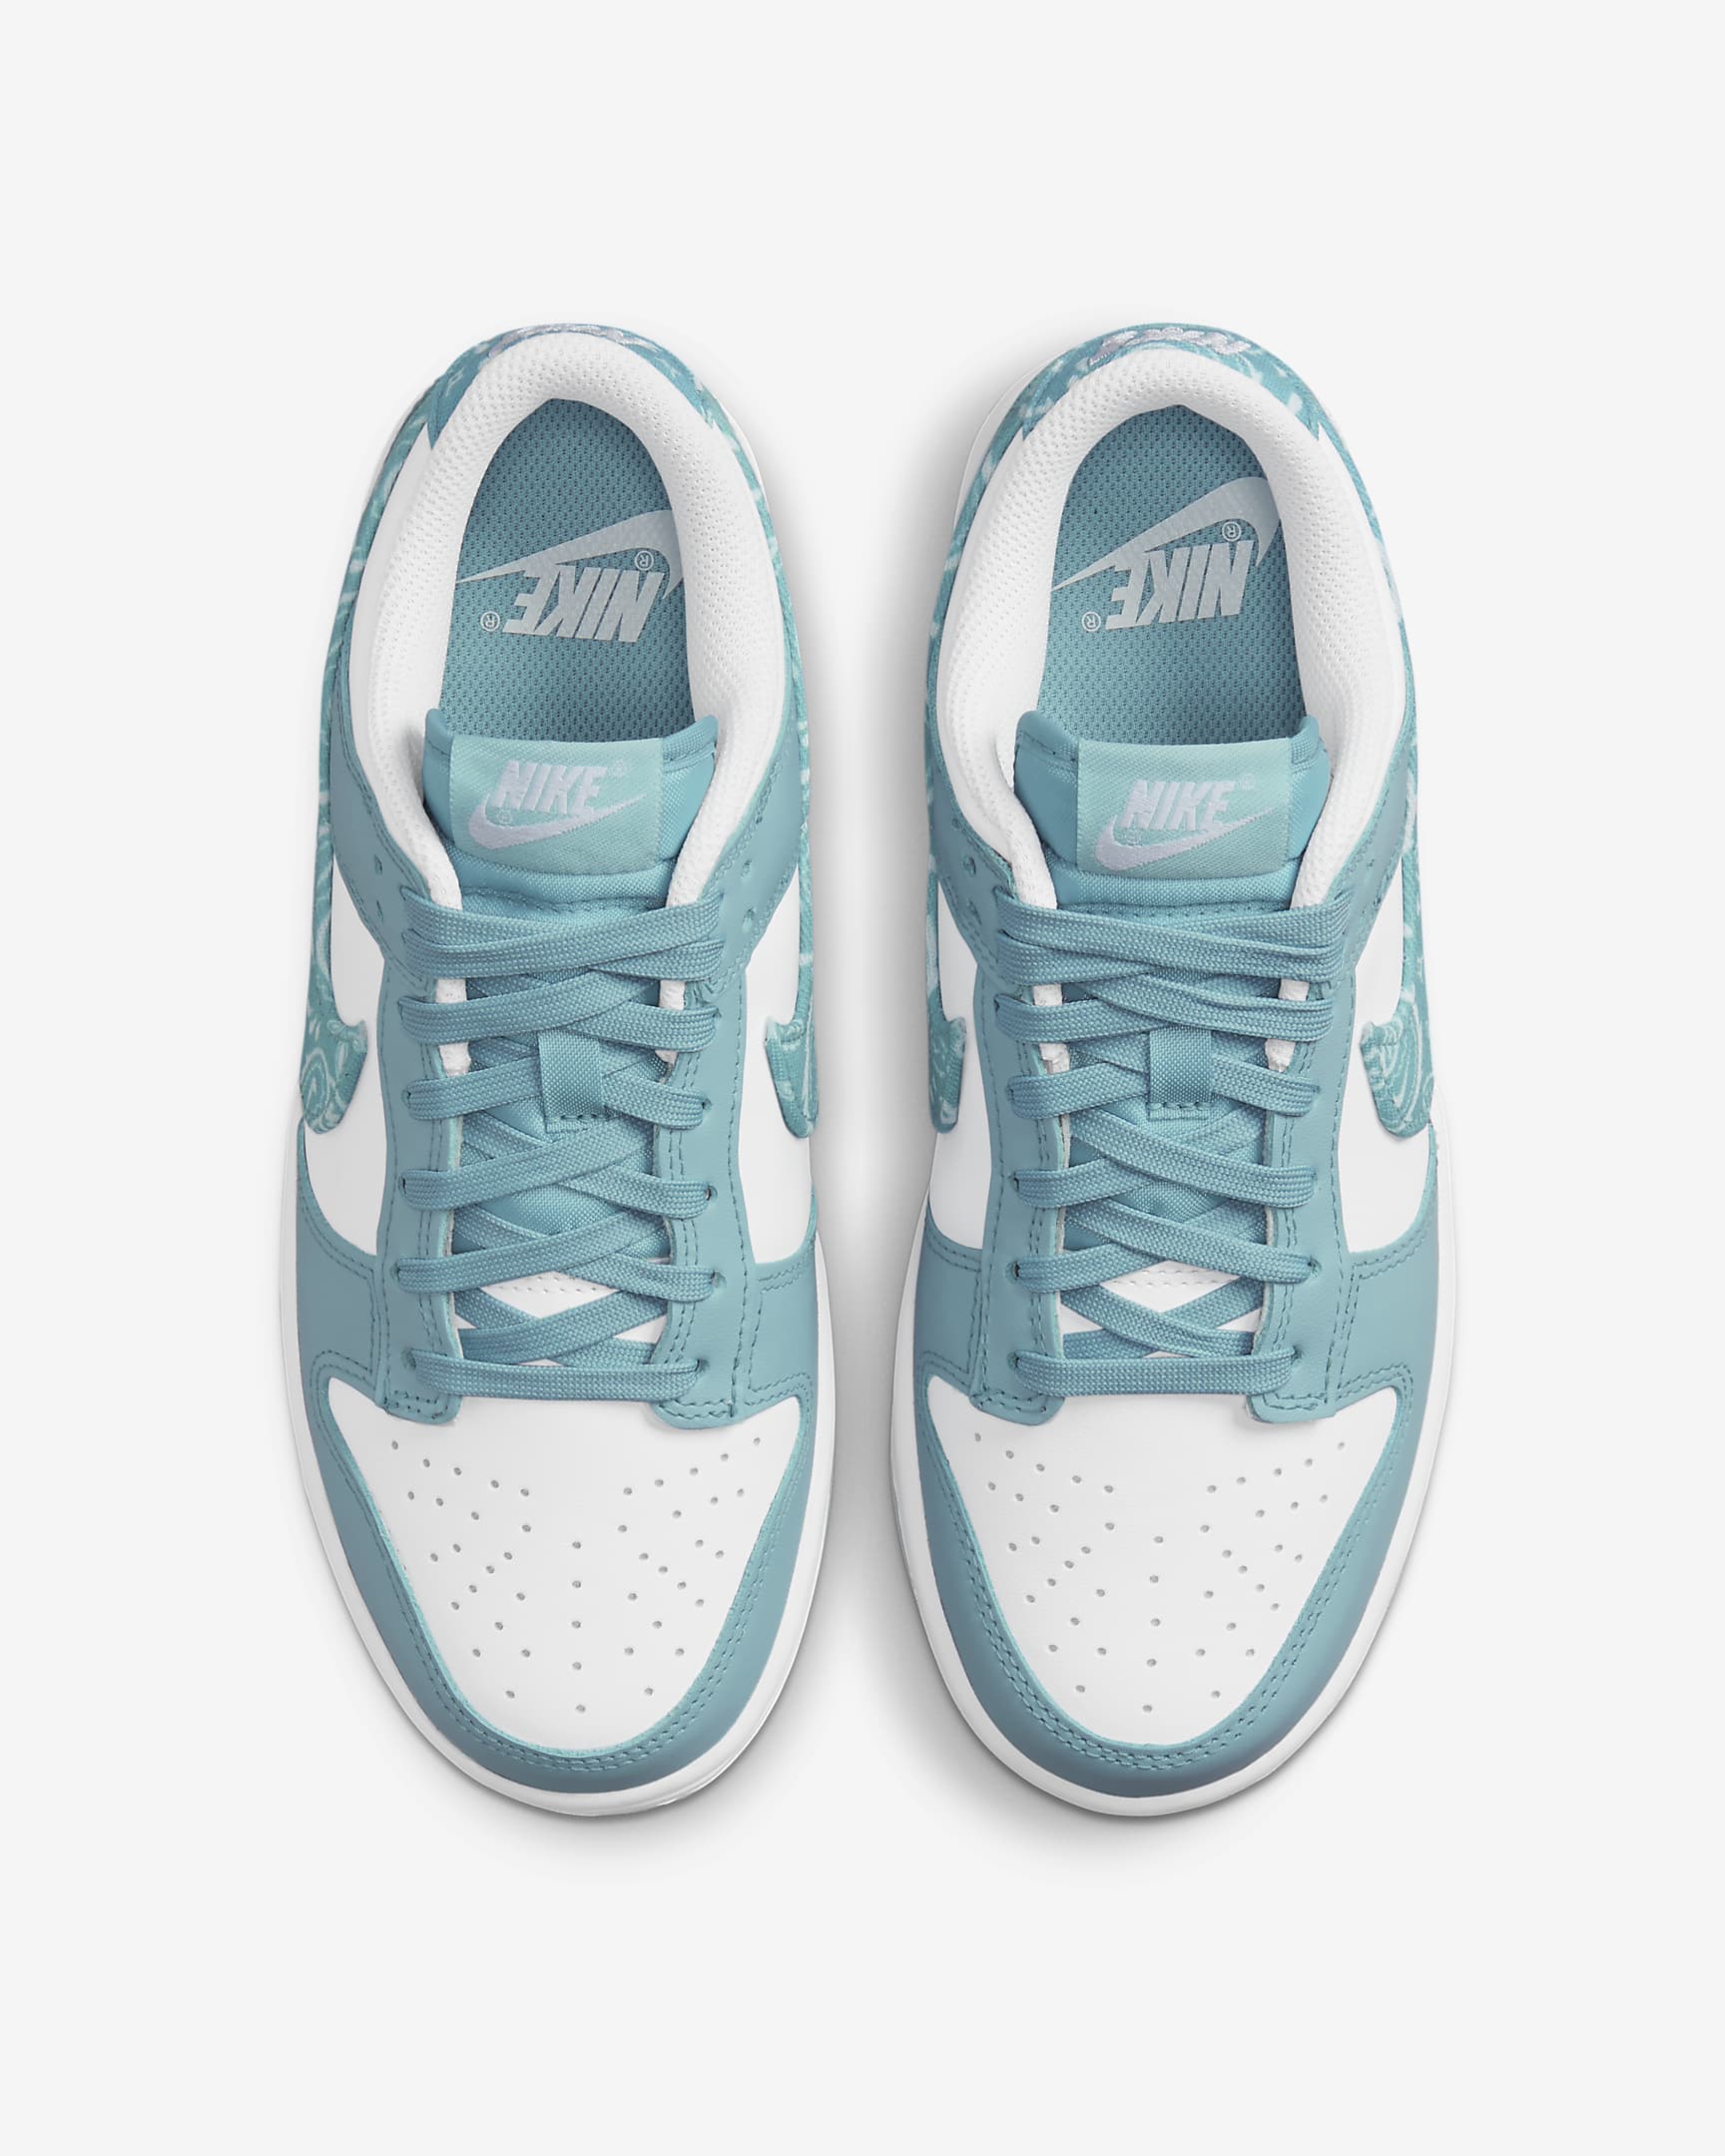 Nike Dunk Low Women's Shoes - White/White/Worn Blue/Worn Blue